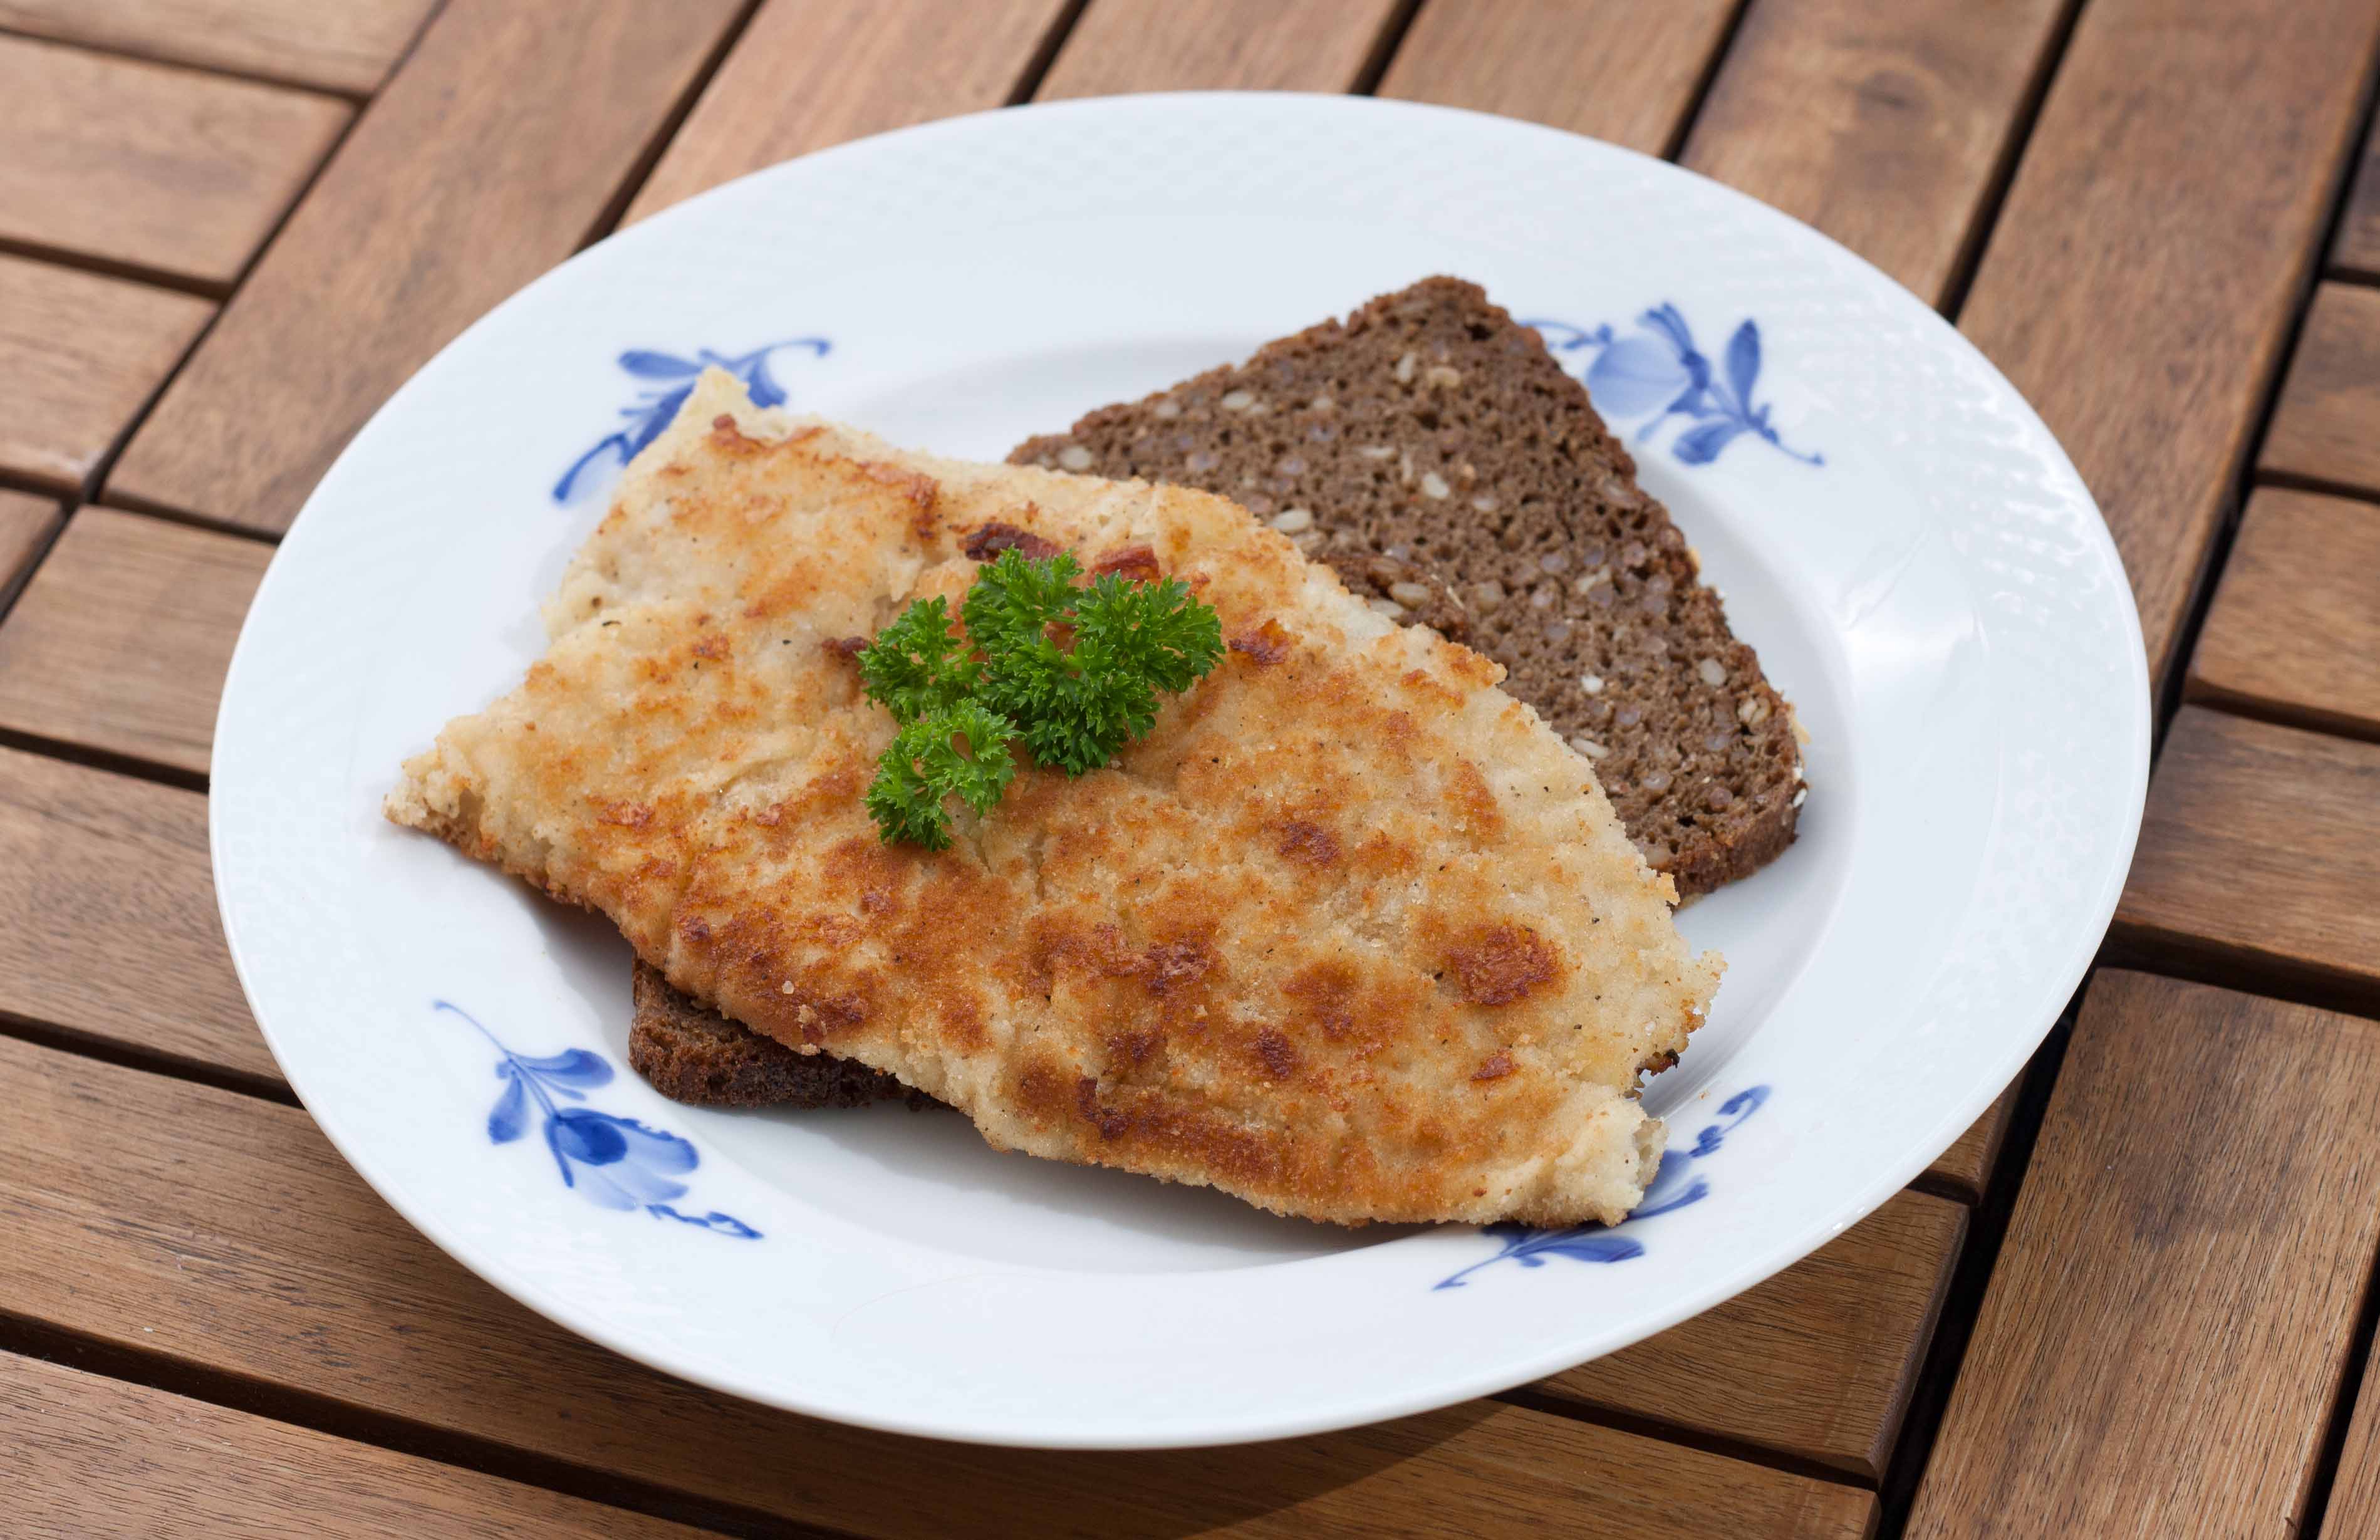 Recipe for Homemade Pan-Fried Coalfish with Rye Bread